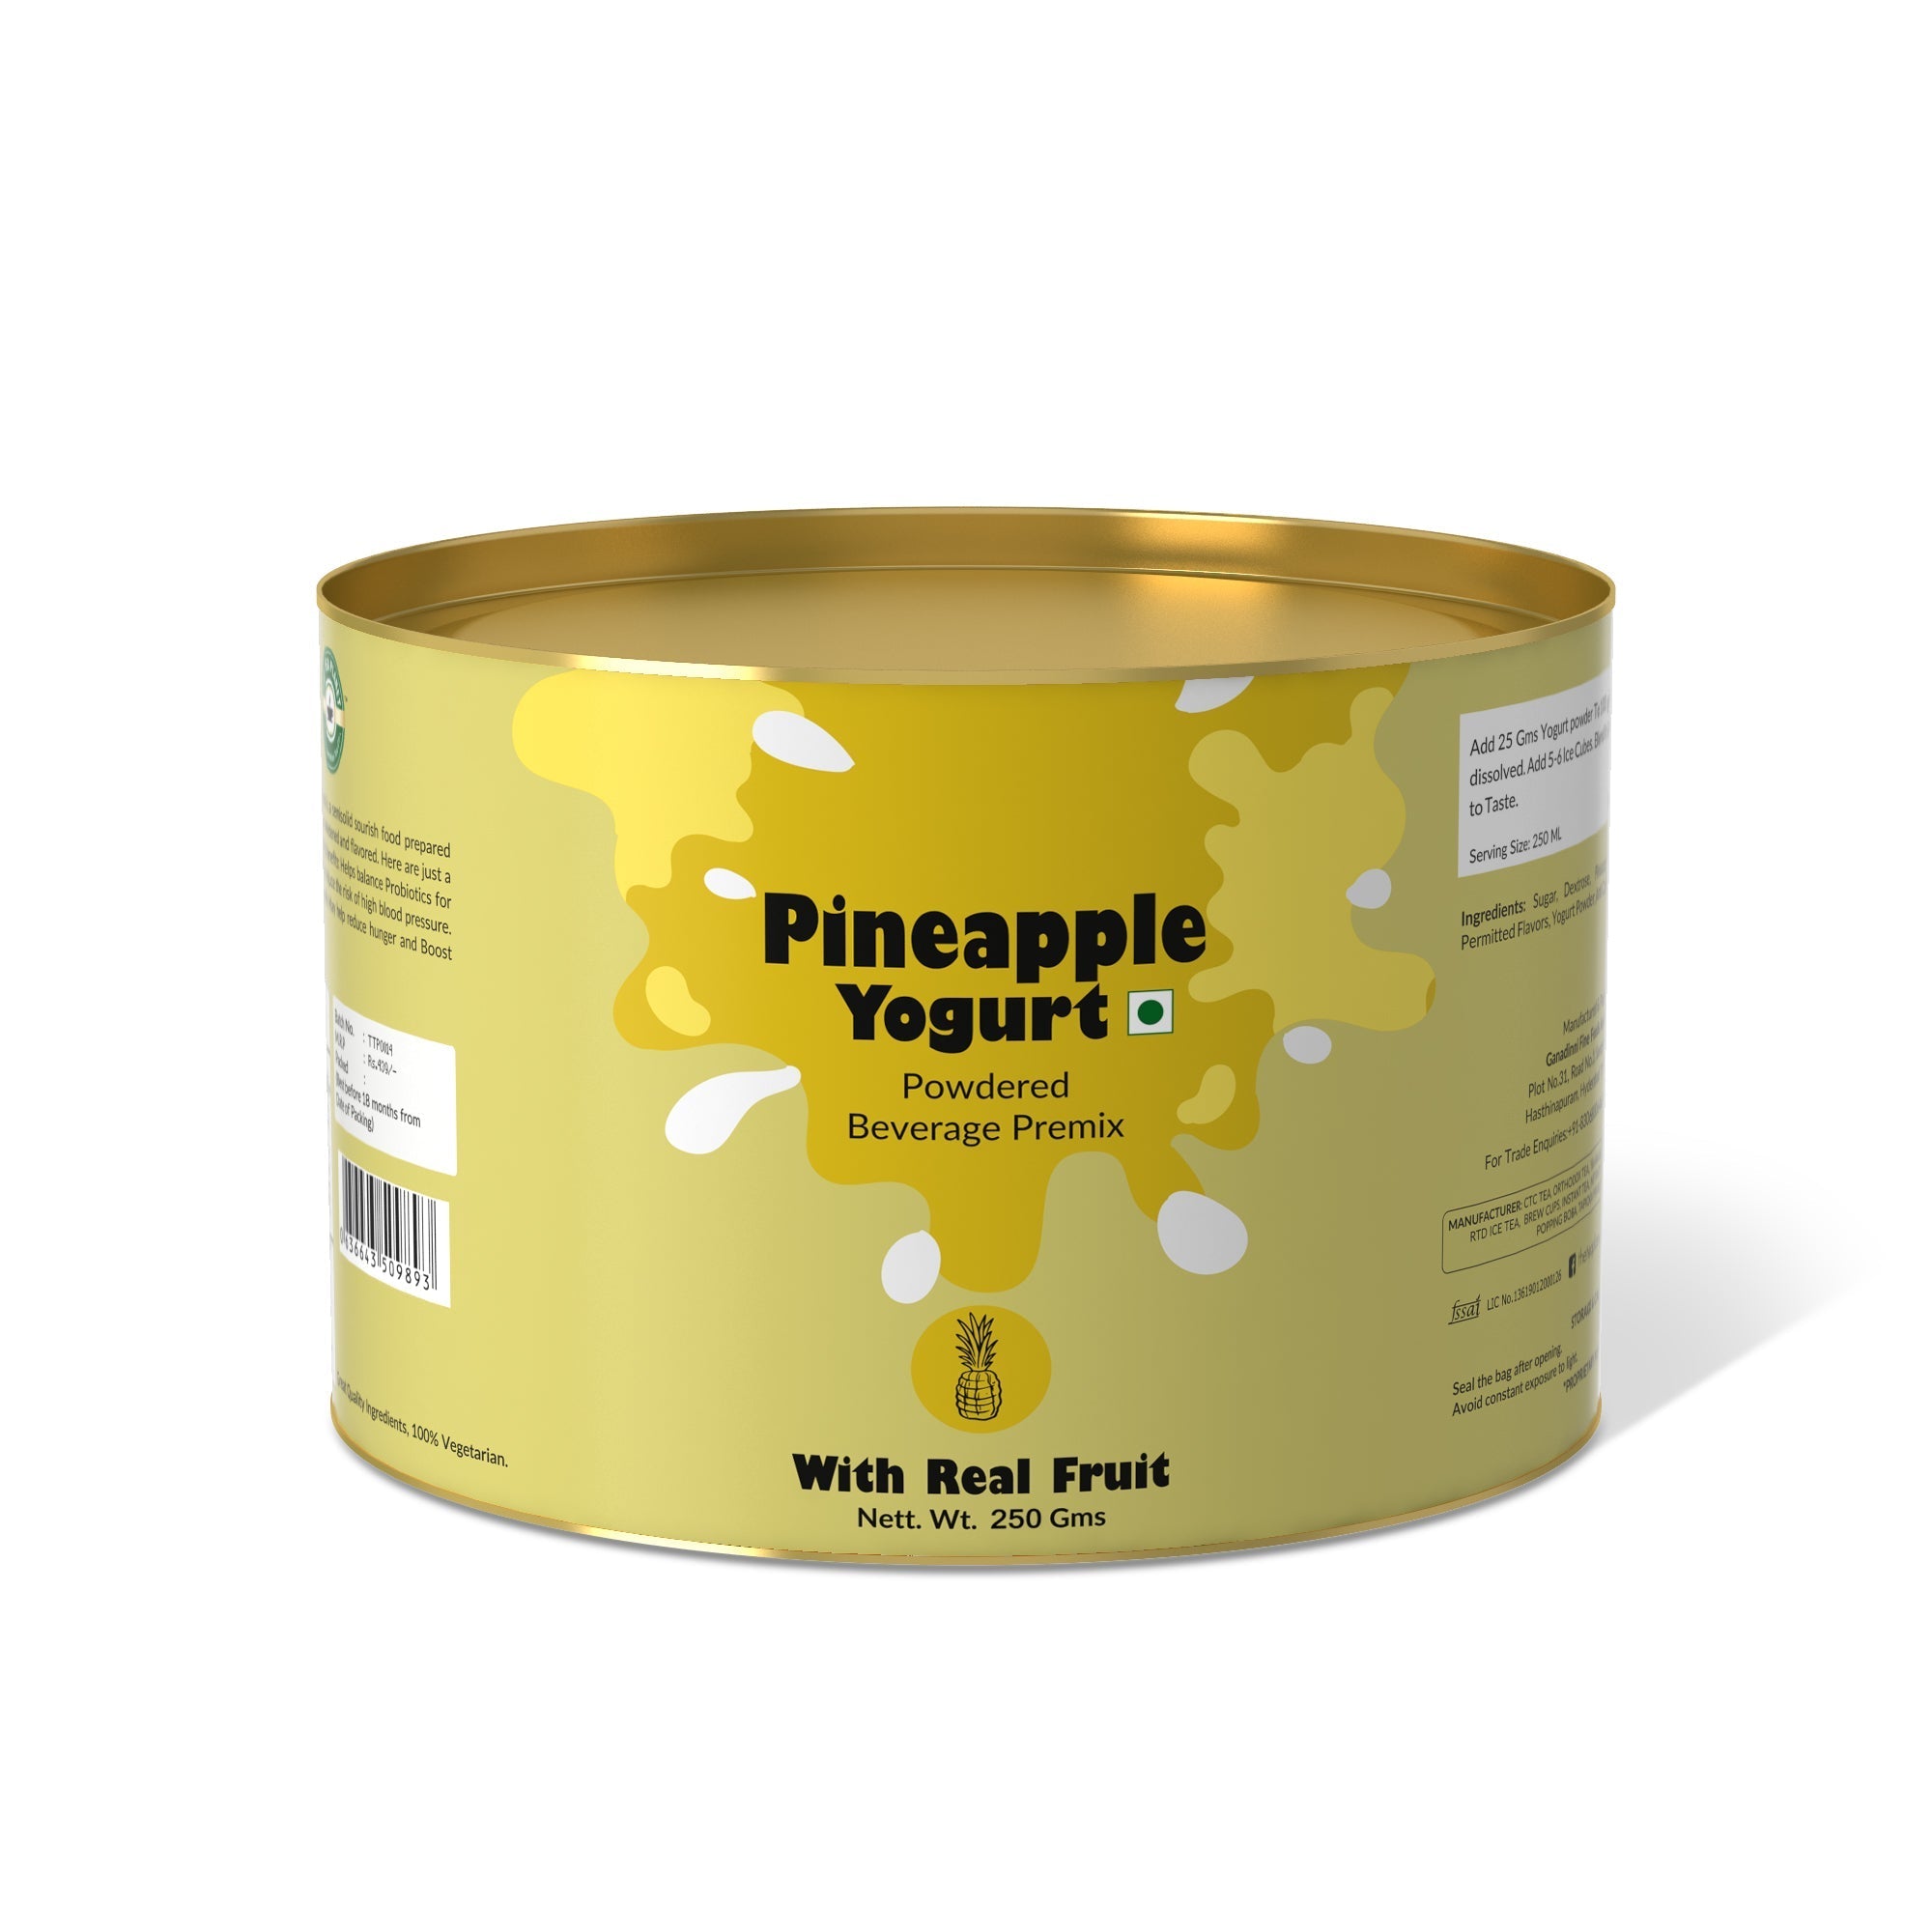 Pineapple Yogurt Mix - 800 gms